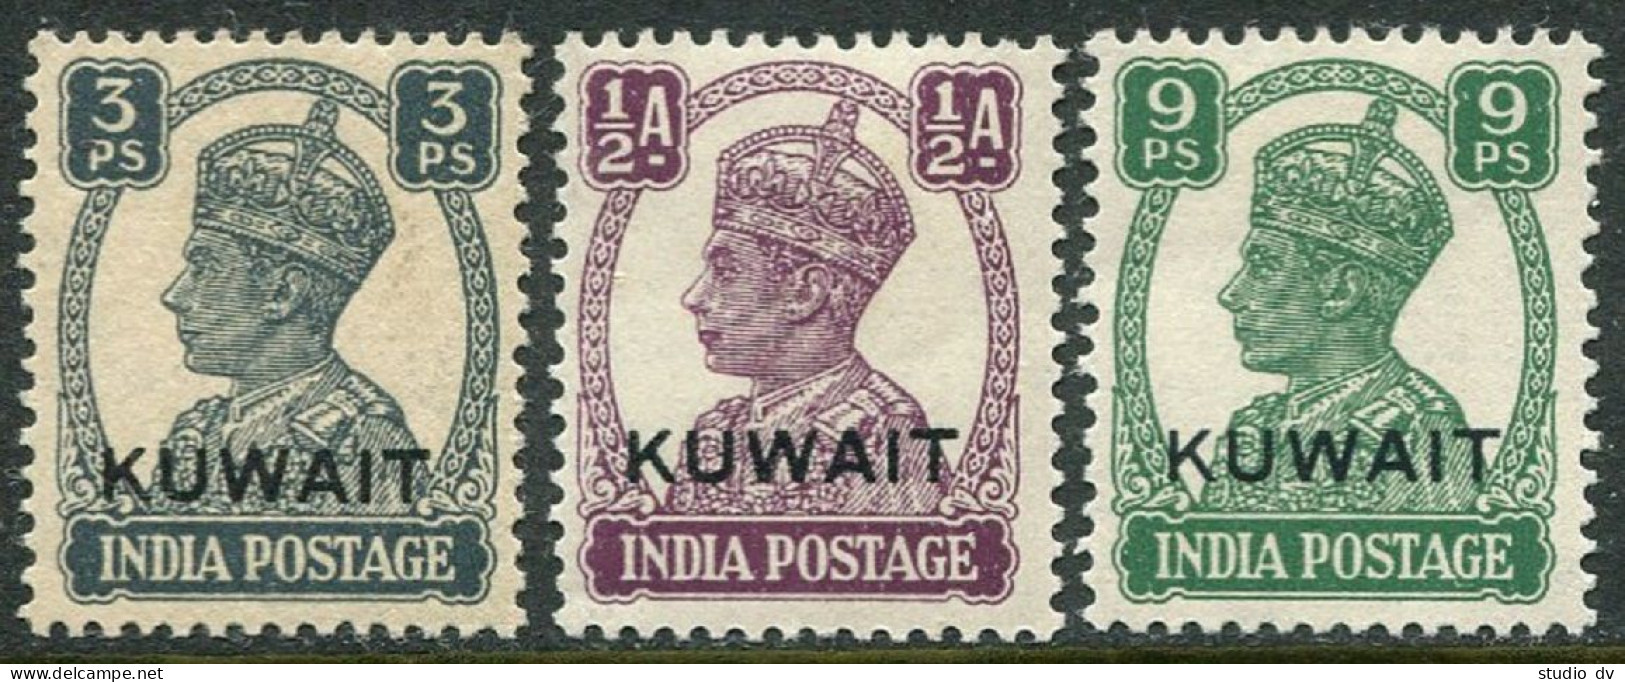 Kuwait 59-61, Hinged. Mi 52-54. Indian Postal Administration, George VI, 1945. - Kuwait